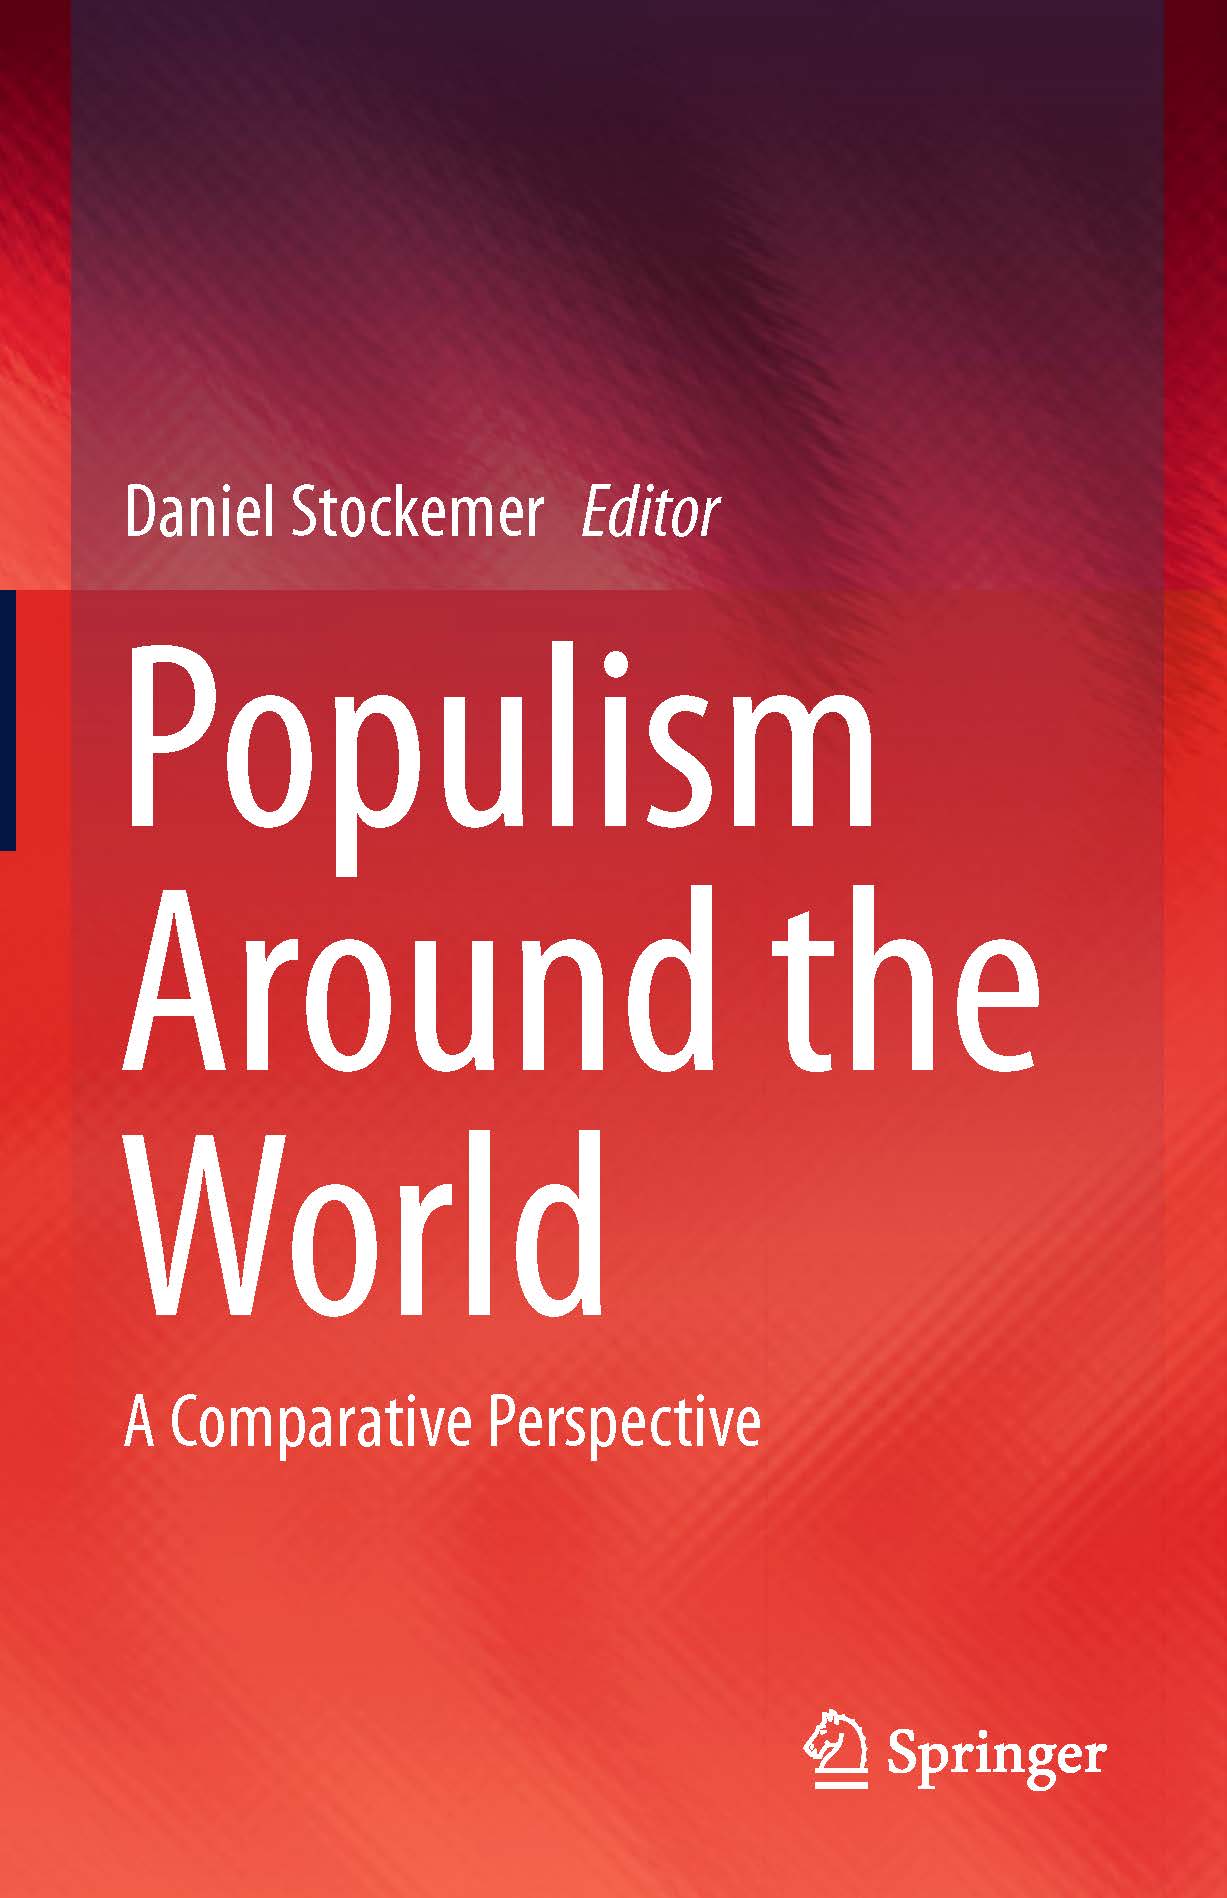 页面提取自－2019_Book_Populism Around the World.jpg